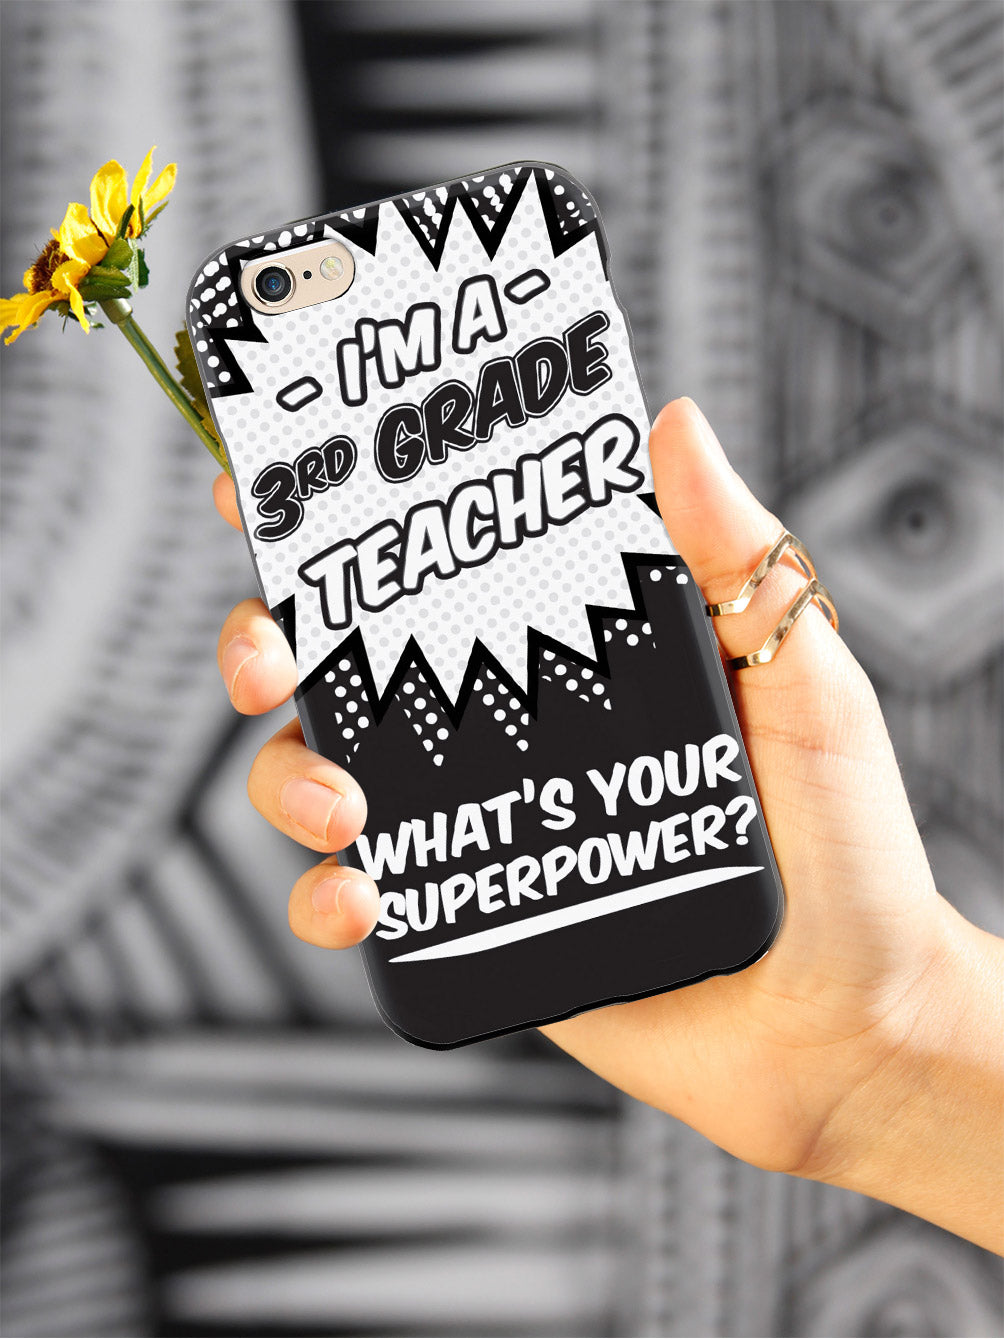 3rd Grade Teacher - What's Your Superpower? Case